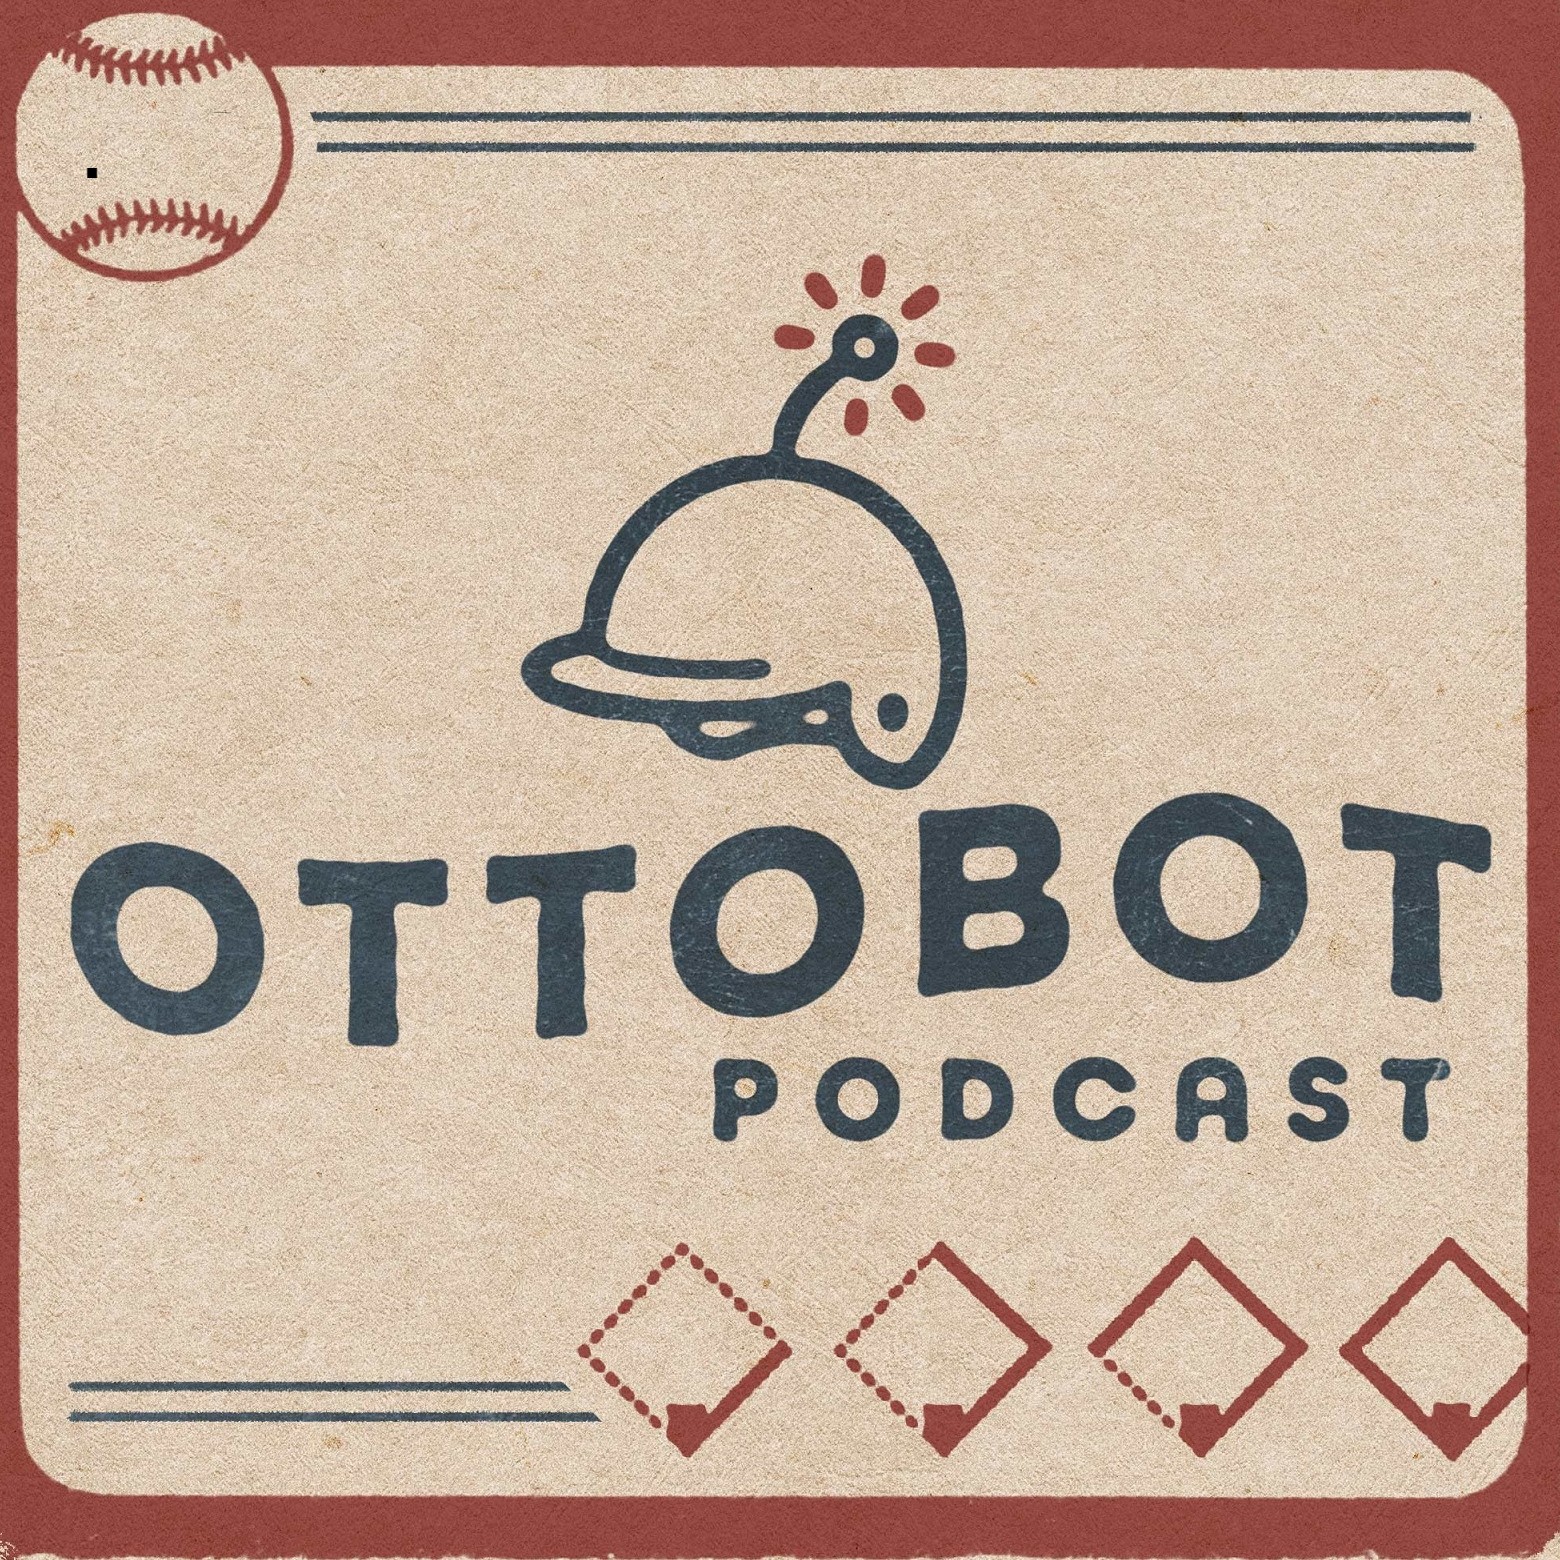 The Ottobot Podcast